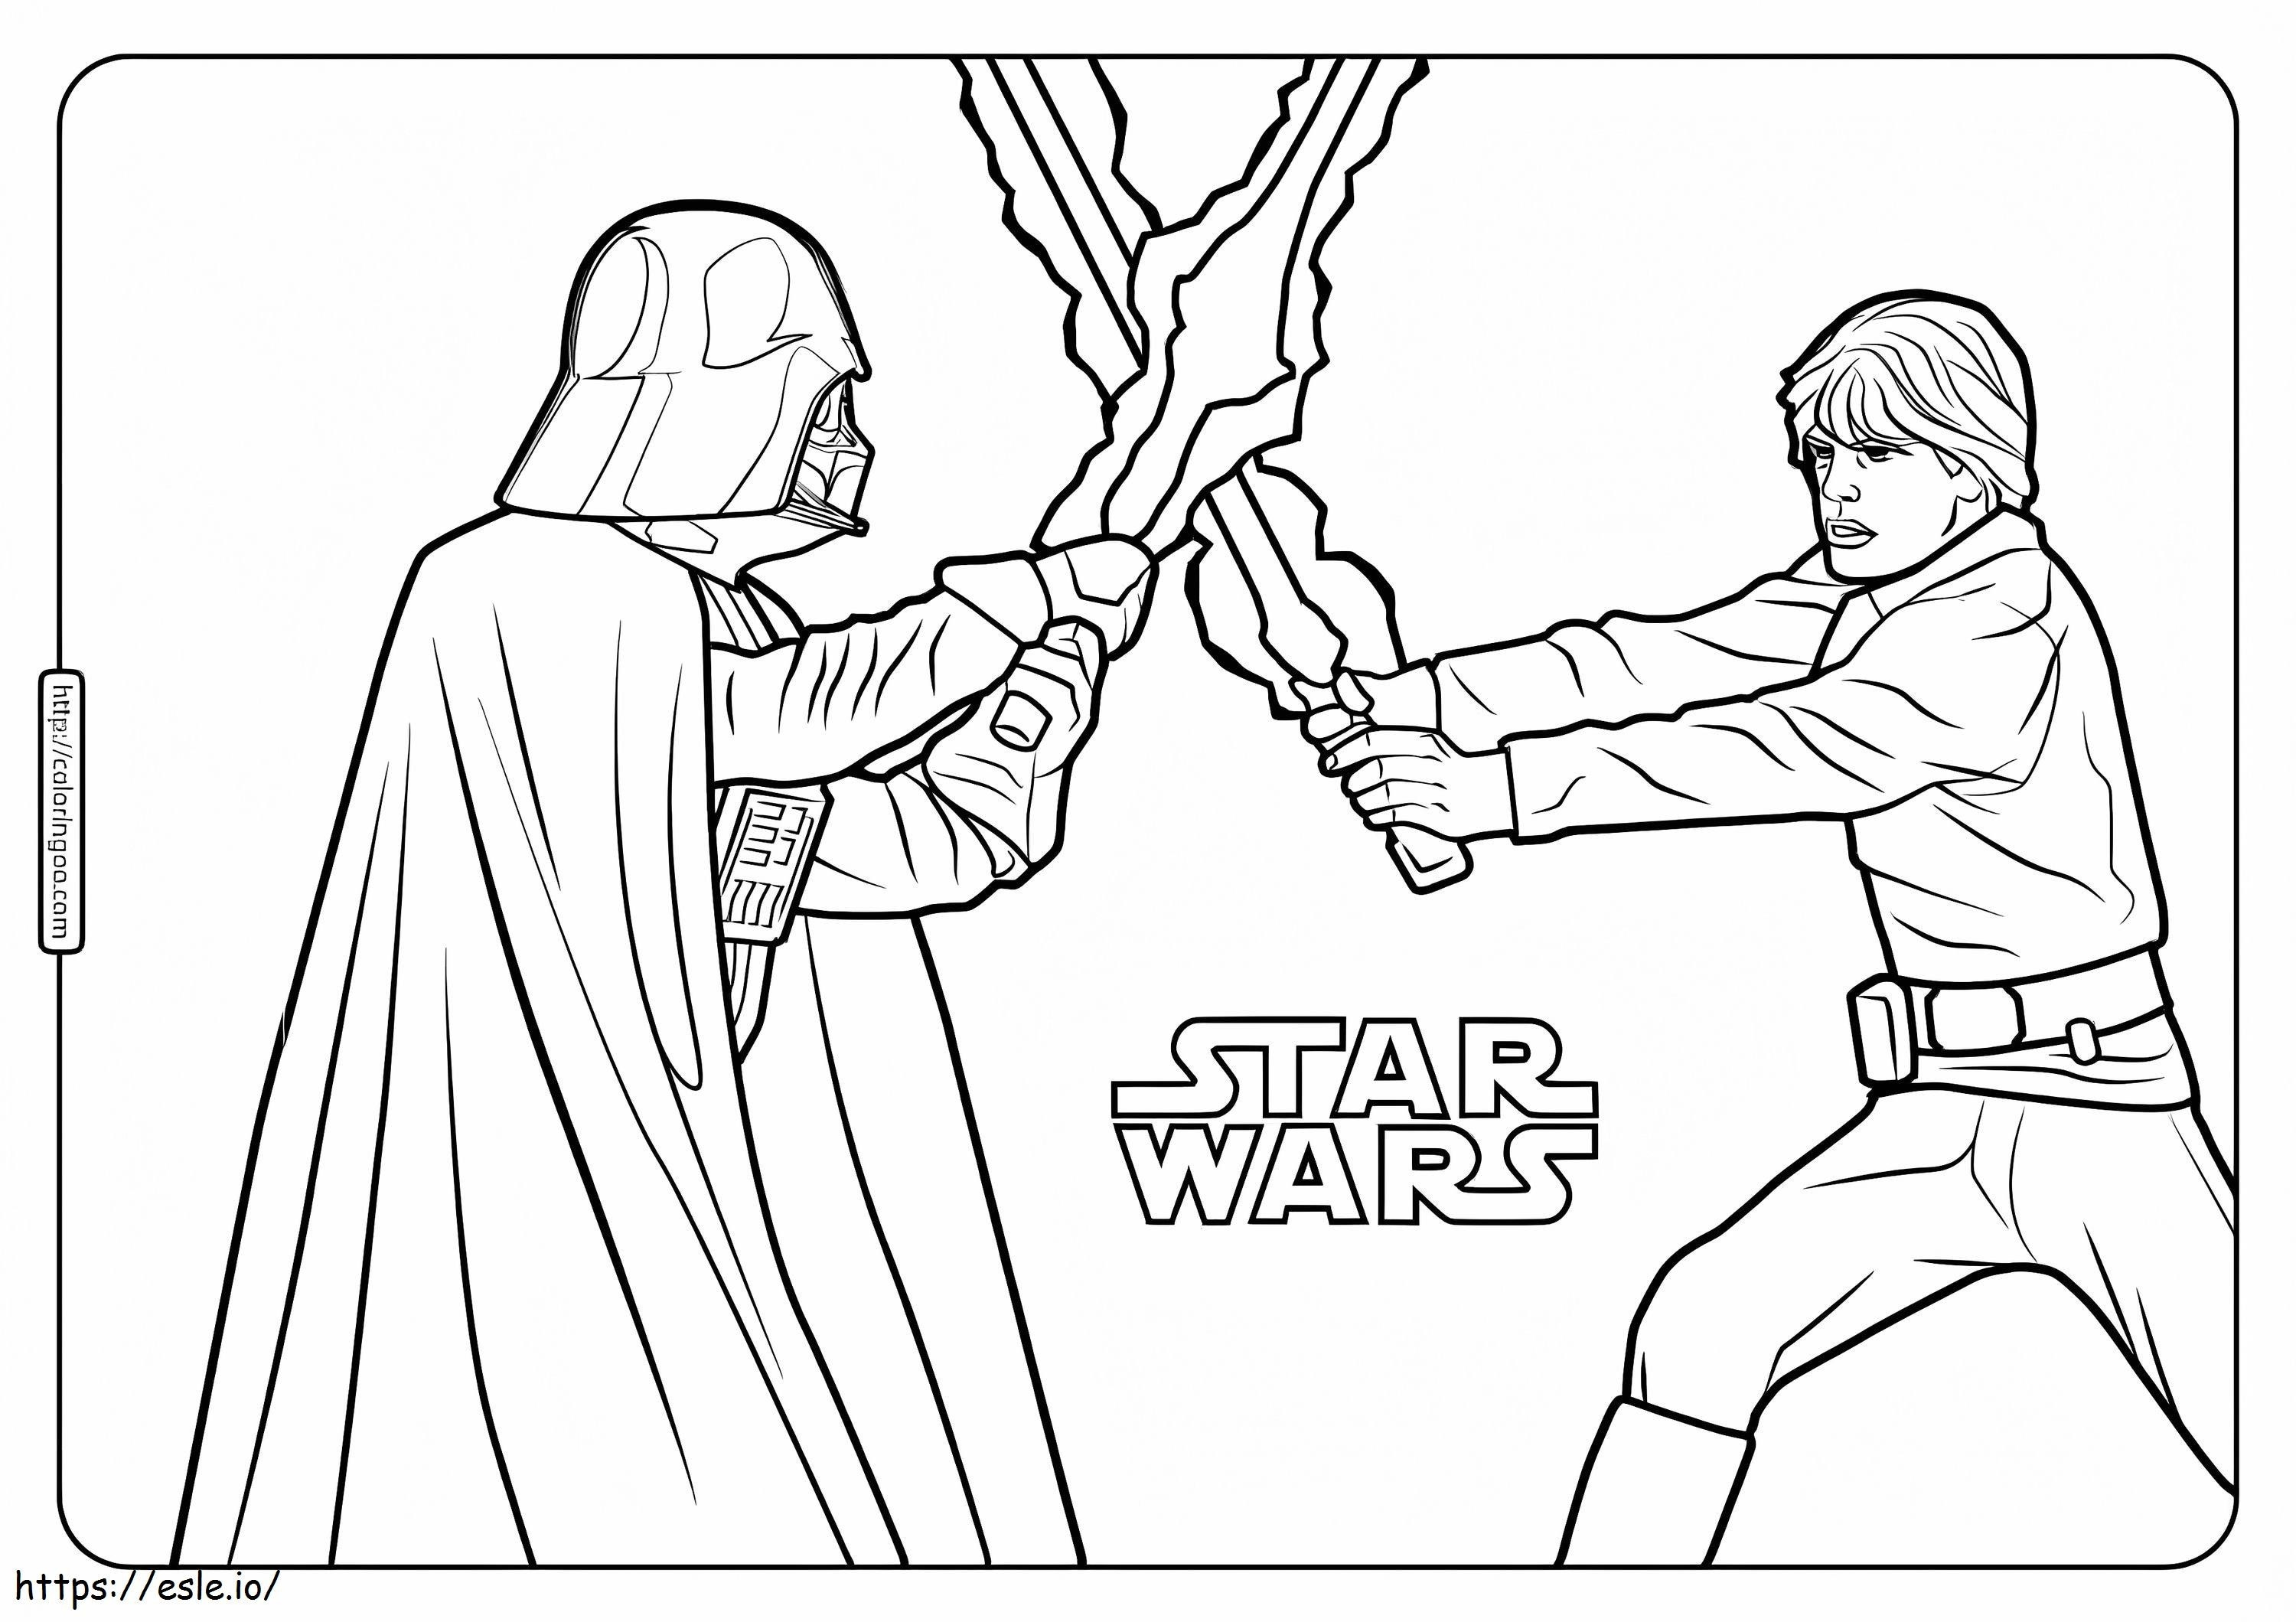 Luke Skywalker Y Darth Vader coloring page